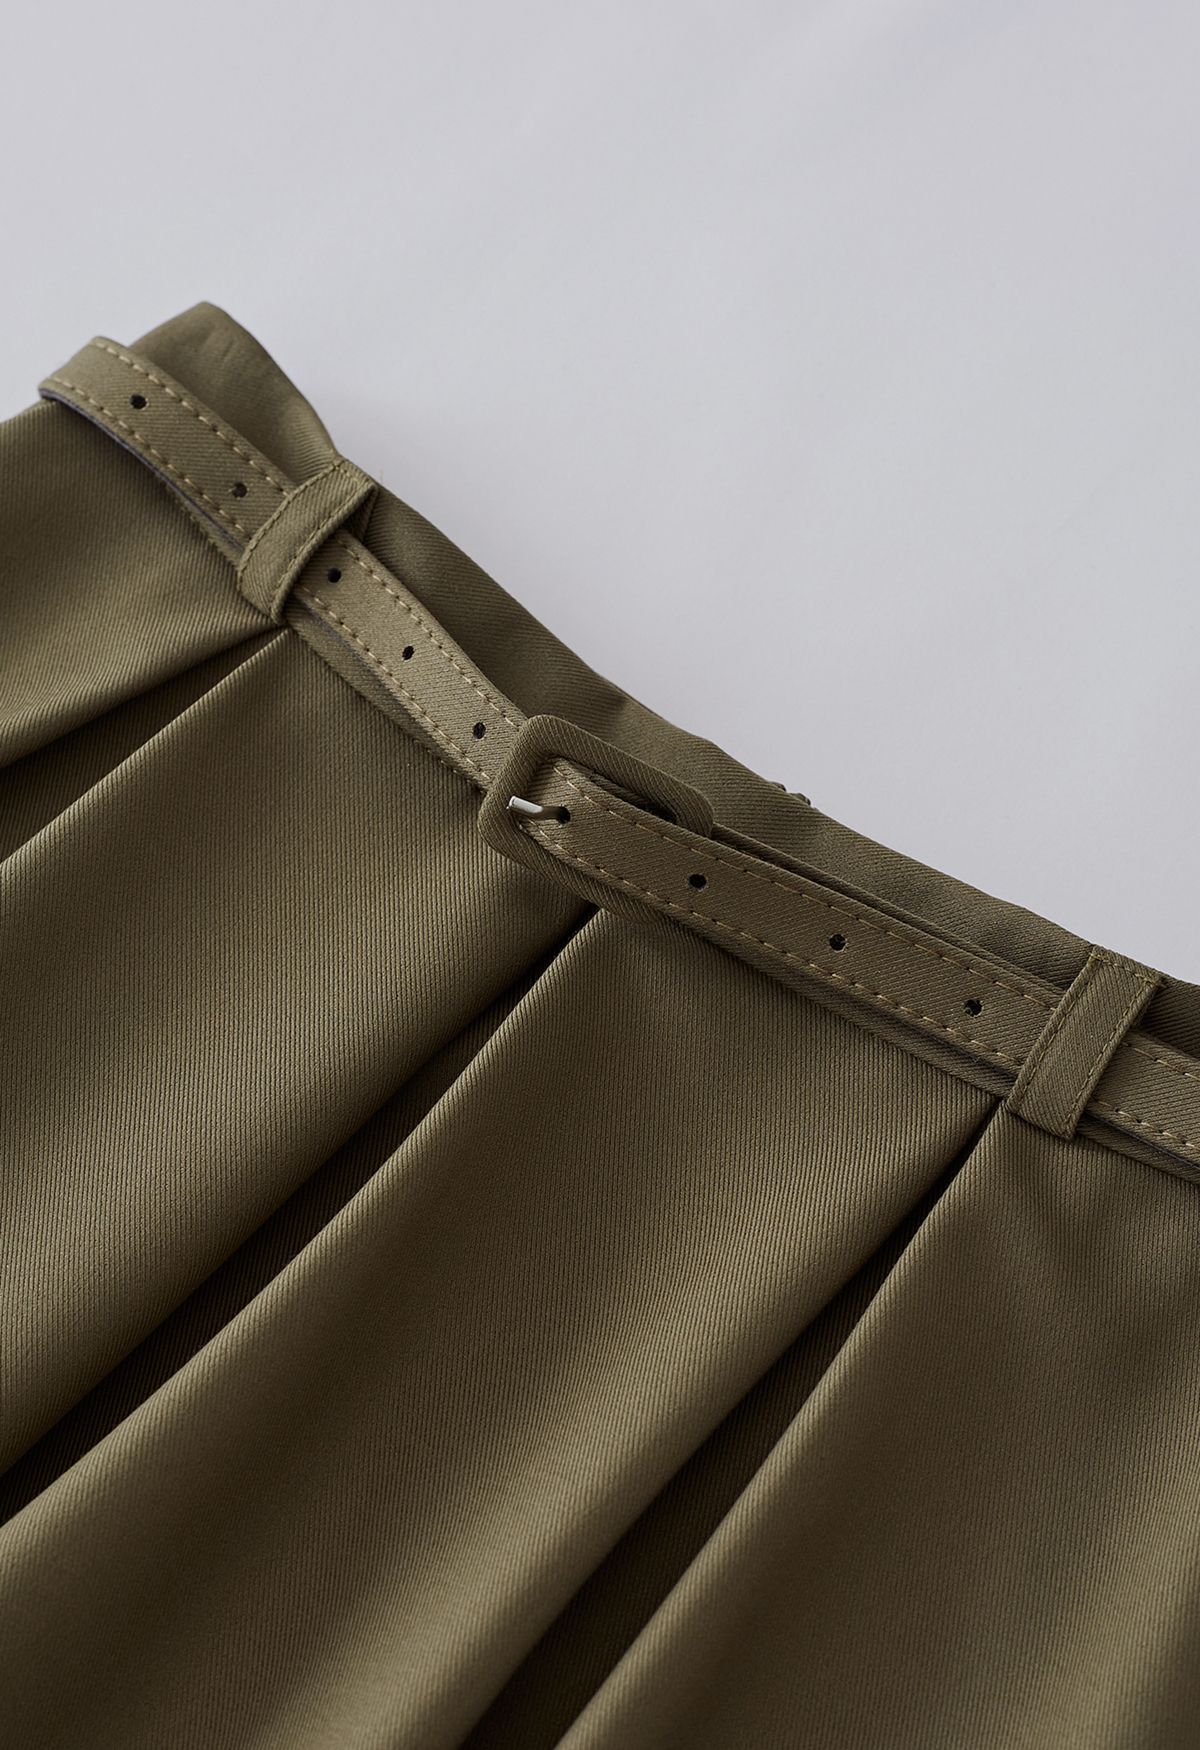 Side Pockets Pleated Belt Midi Skirt in Moss Green